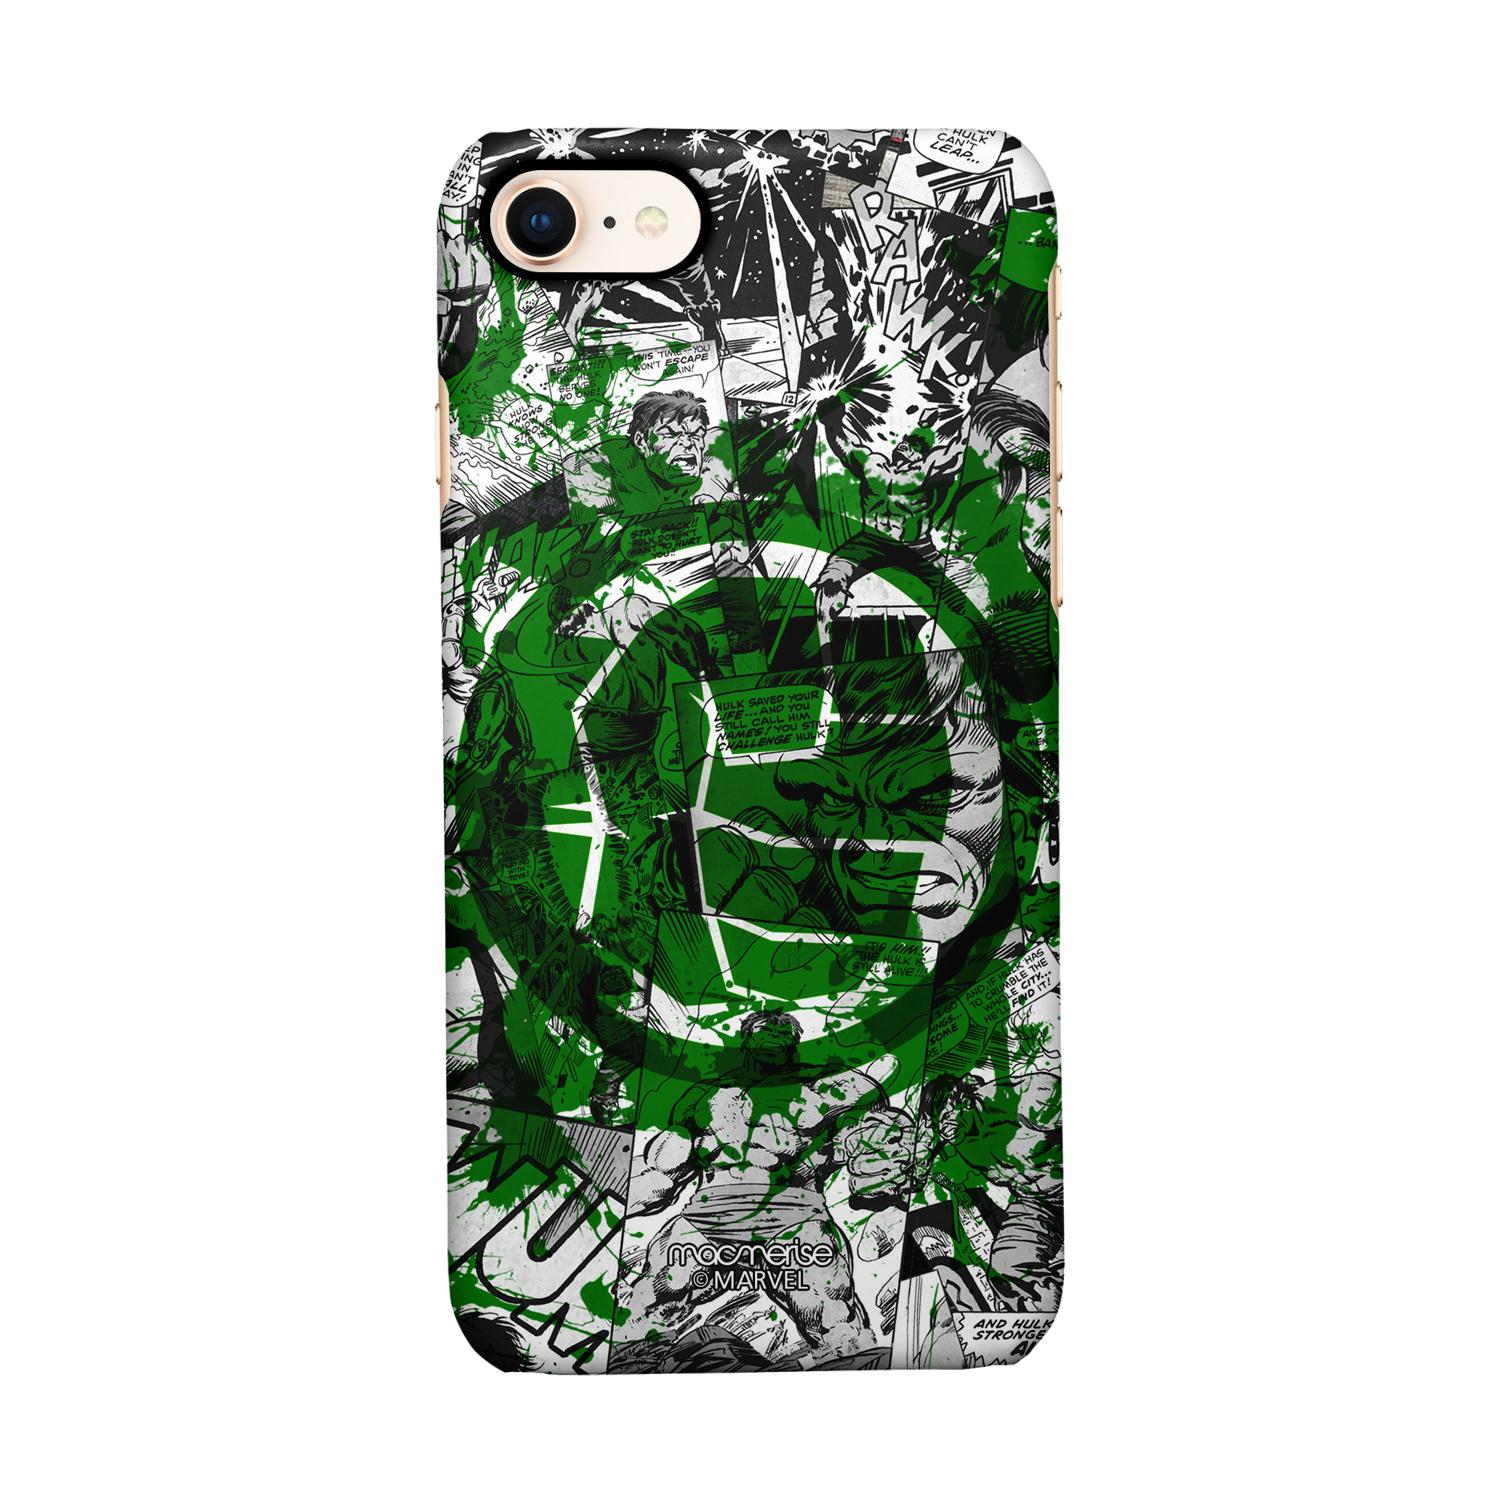 Buy Splash Out Hulk Fist - Sleek Phone Case for iPhone 8 Online